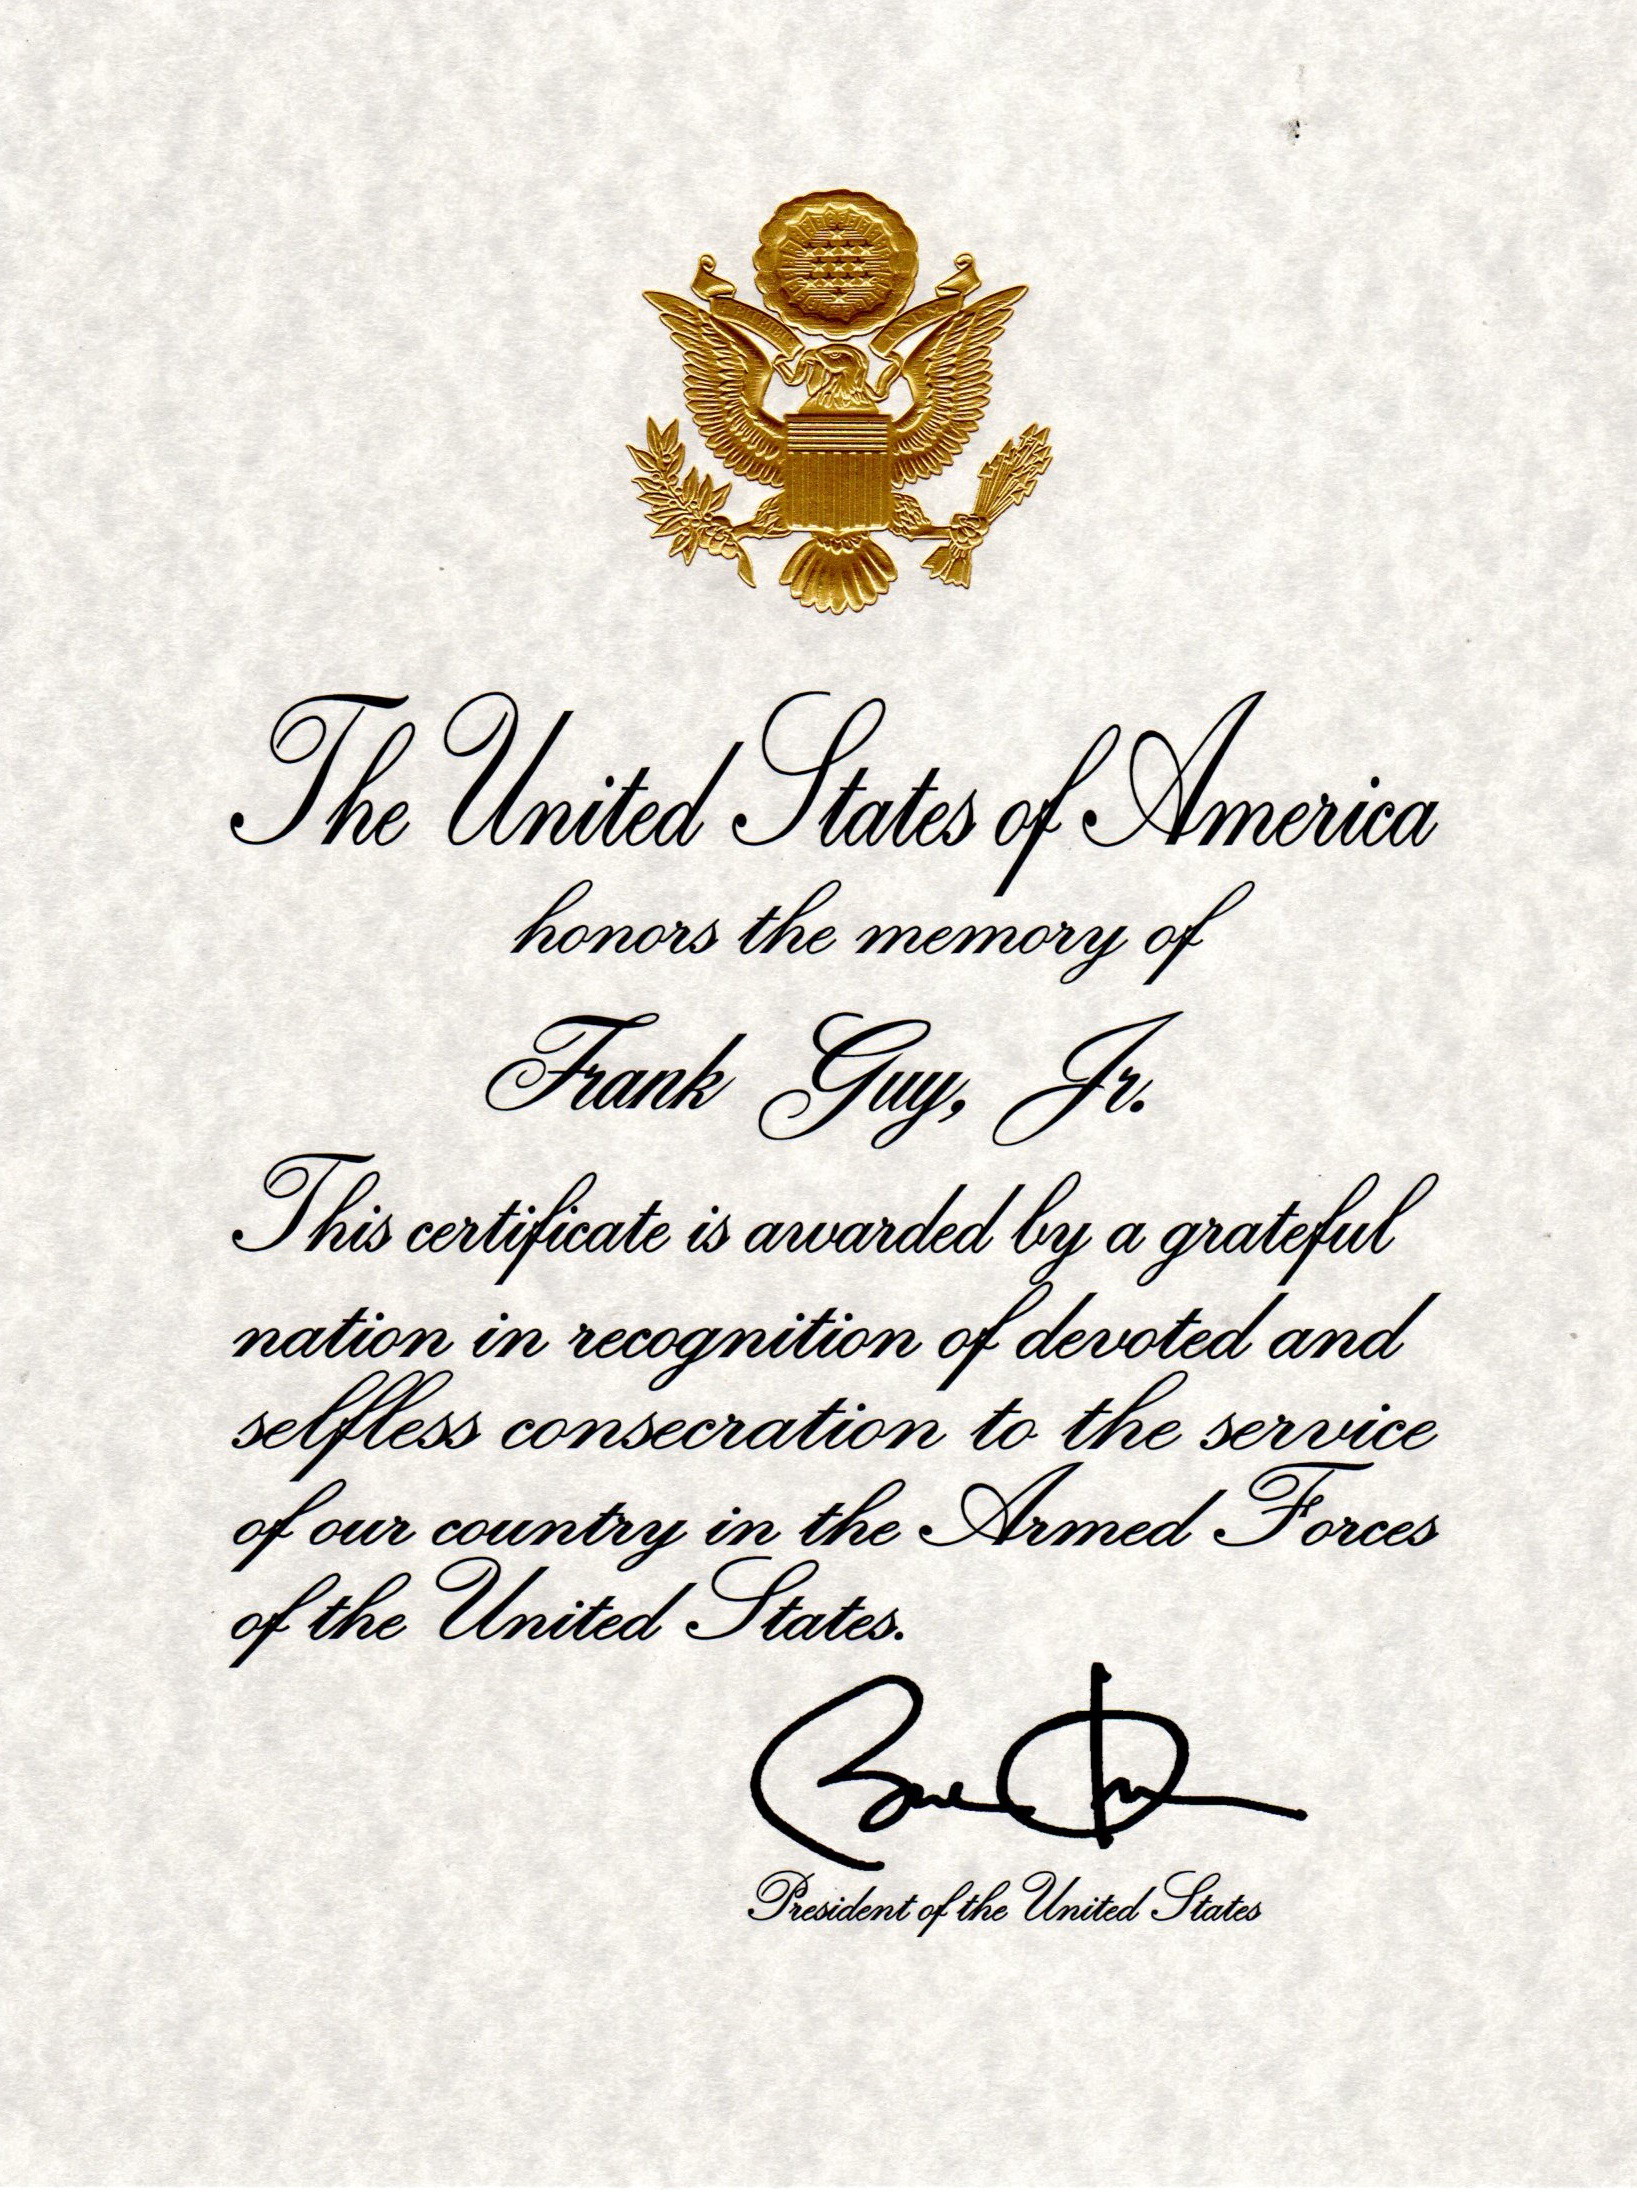 Frank Guy - Presidential Memorial Certificate